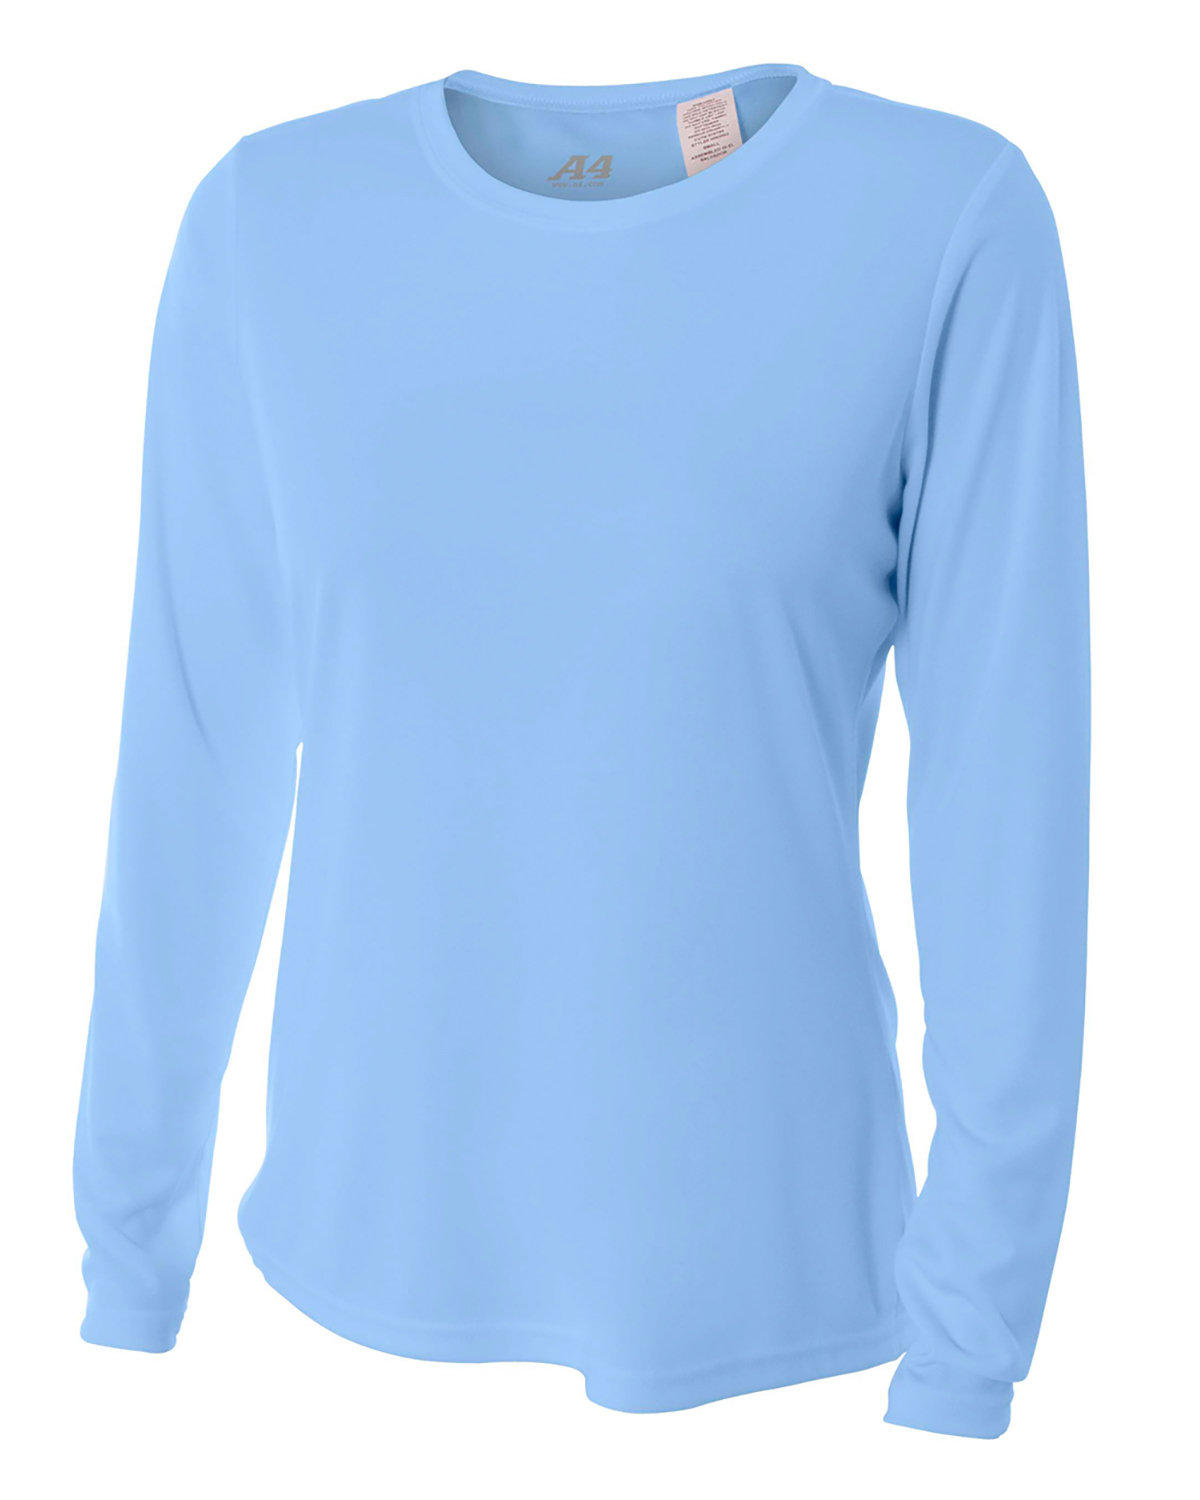 A4 Ladies' Long Sleeve Cooling Performance Crew Shirt LIGHT BLUE 